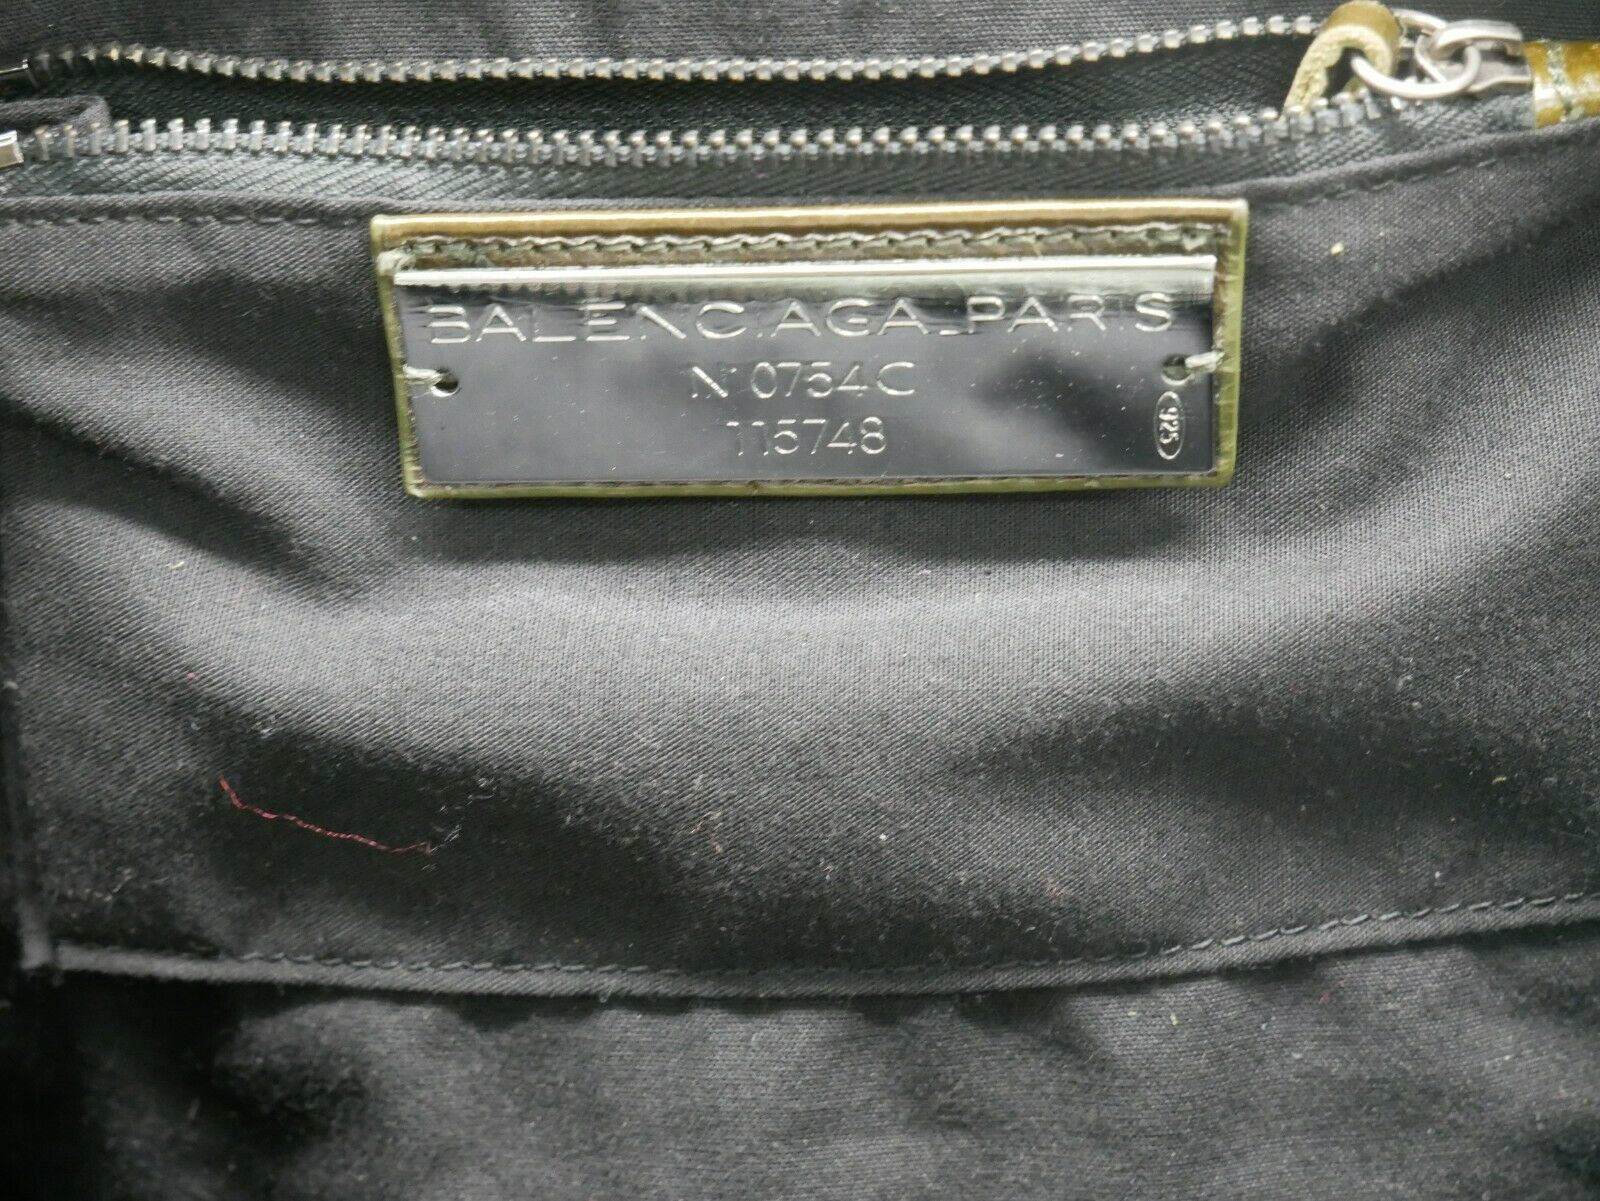 Balenciaga Paris Green Leather Tassels Handbag Made in ITALY No.0754c ...